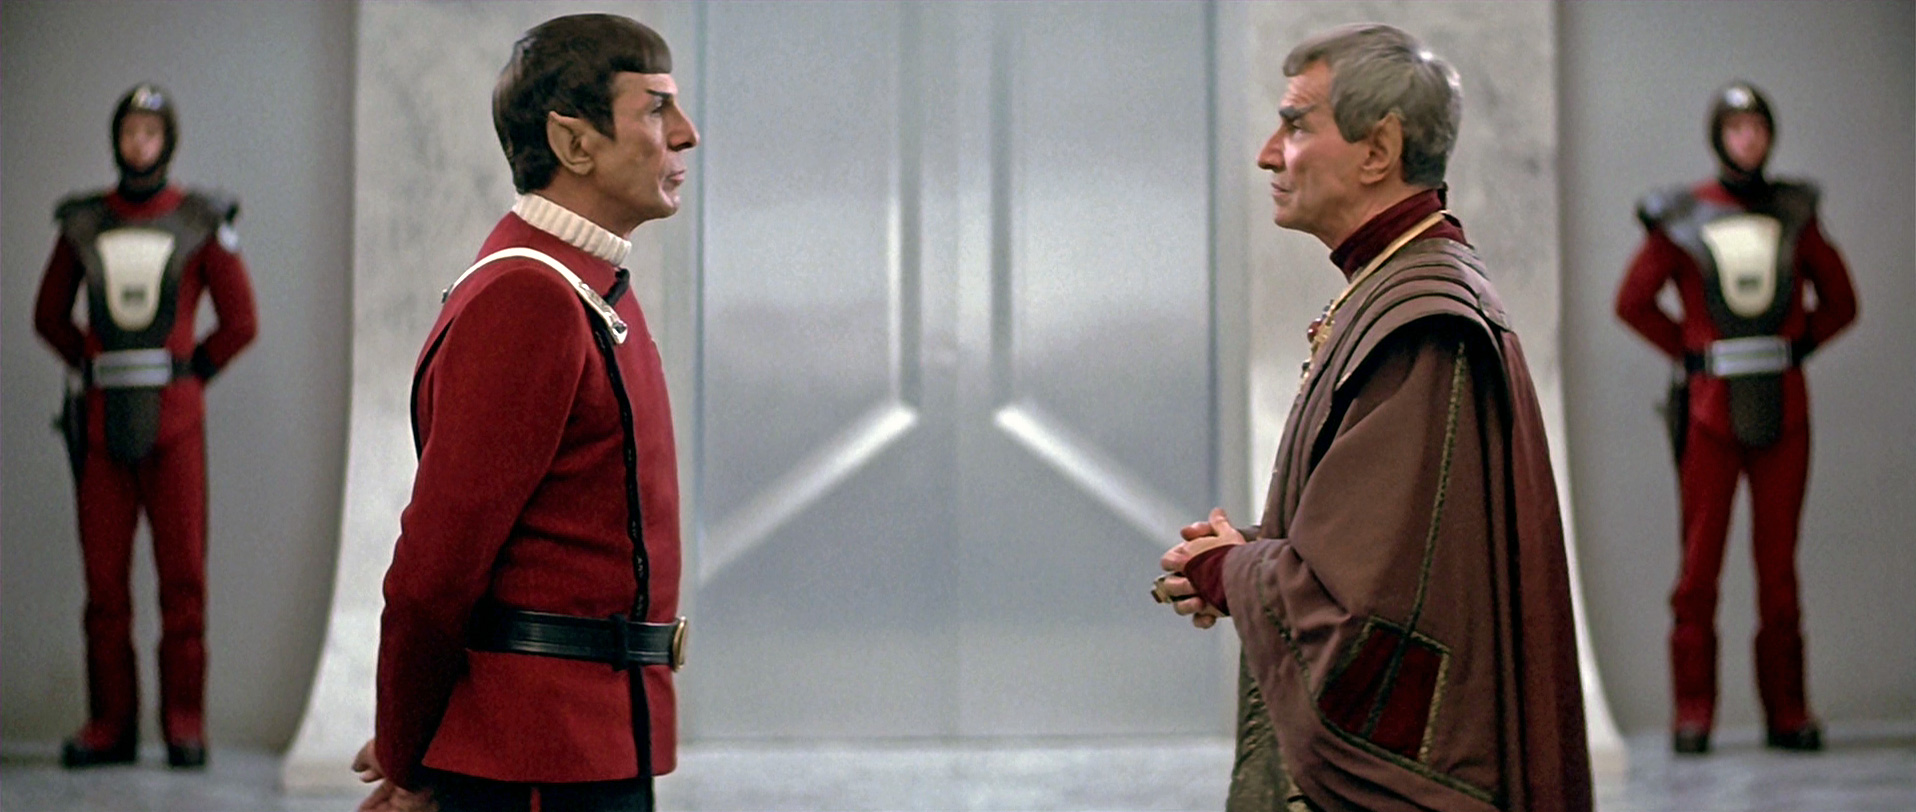 RIP Leonard Nimoy A.K.A Spock from TOS Latest?cb=20120730074808&path-prefix=en